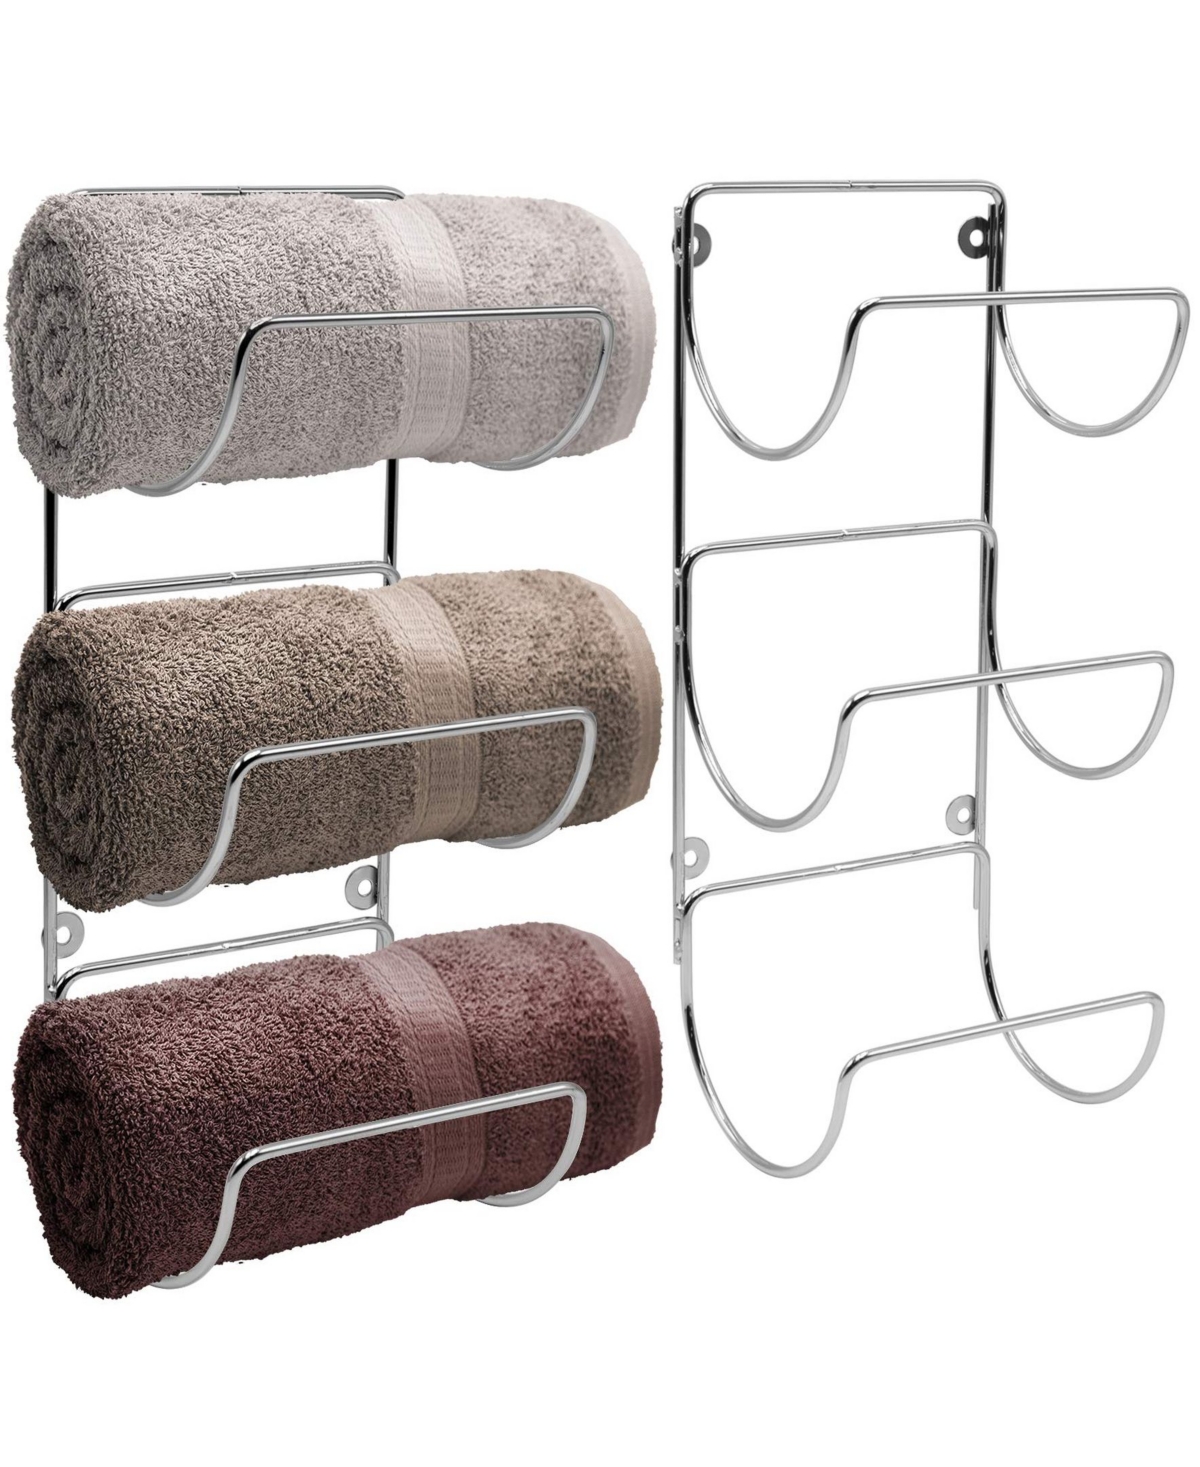 3-Level Towel Rack, Set of 2 - Silver-Tone